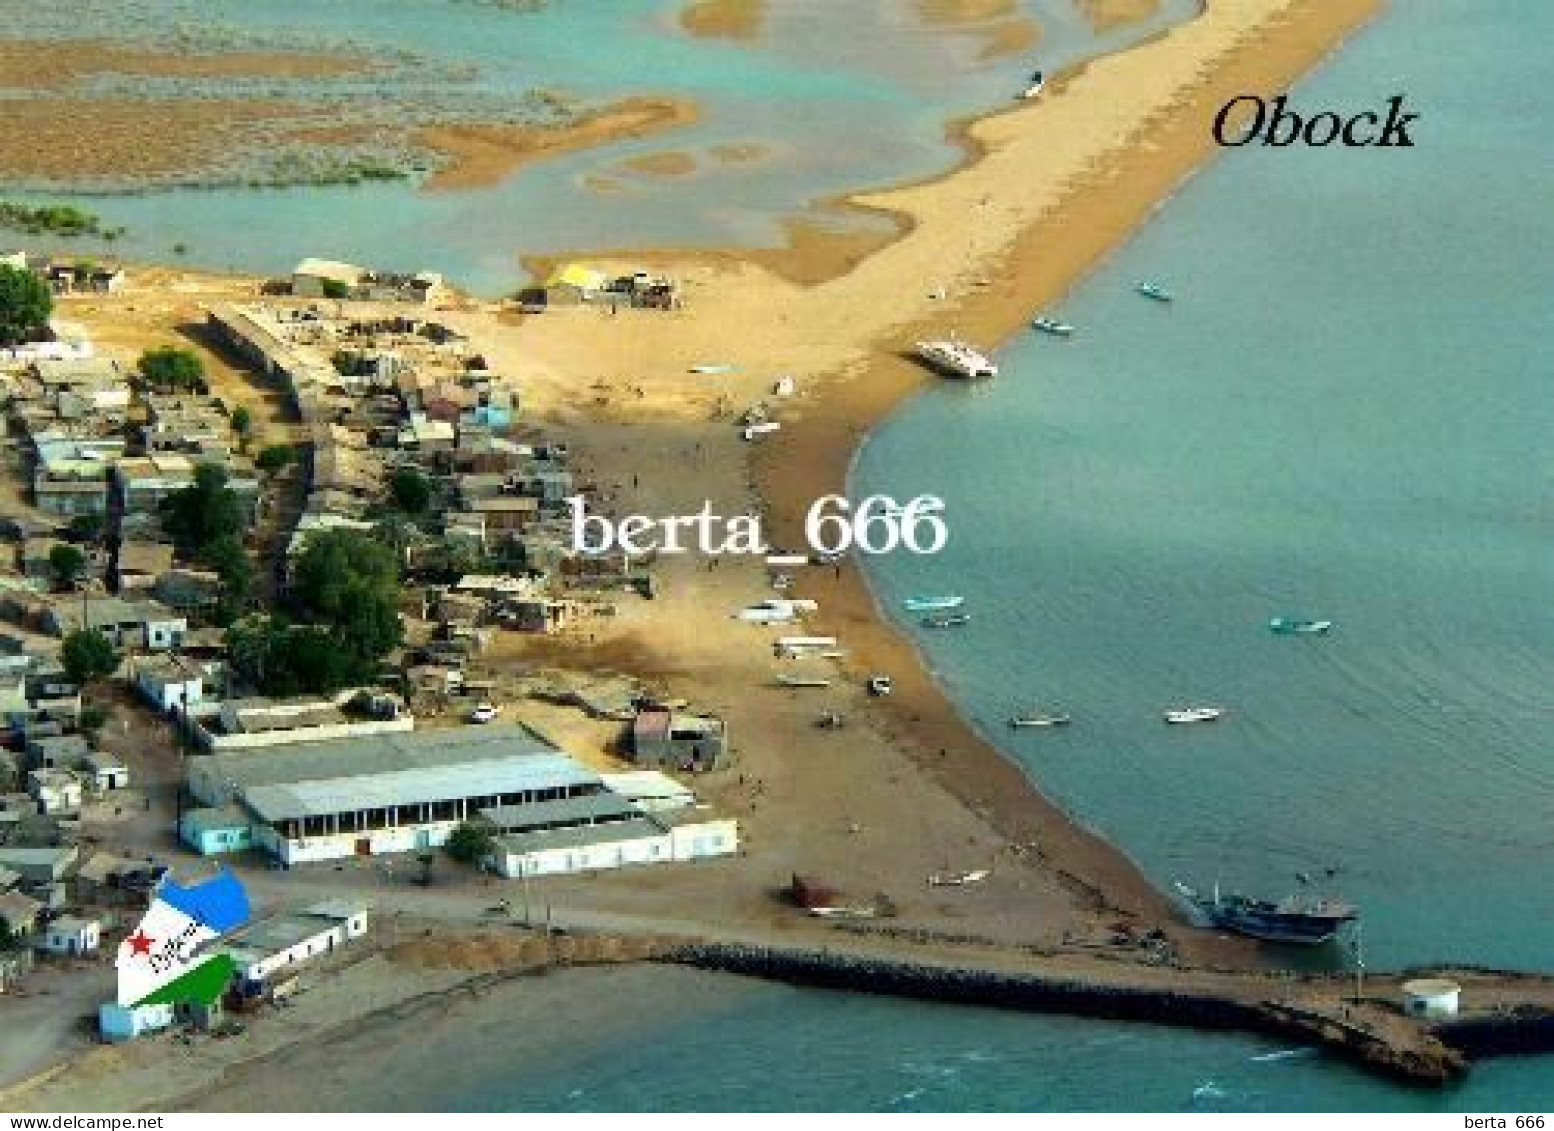 Djibouti Obock Aerial View New Postcard - Gibuti